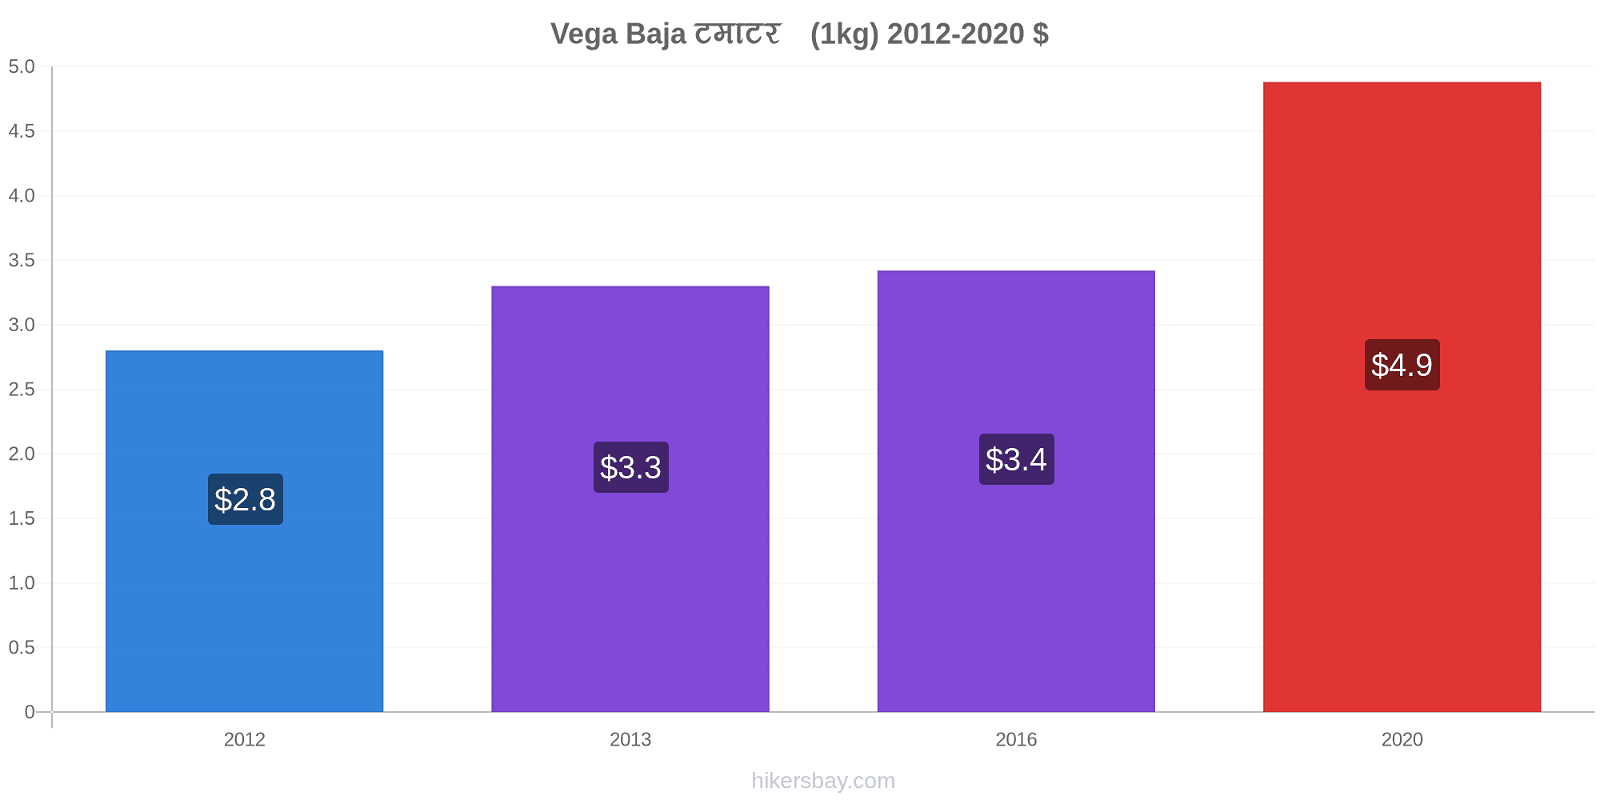 Vega Baja मूल्य परिवर्तन टमाटर (1kg) hikersbay.com